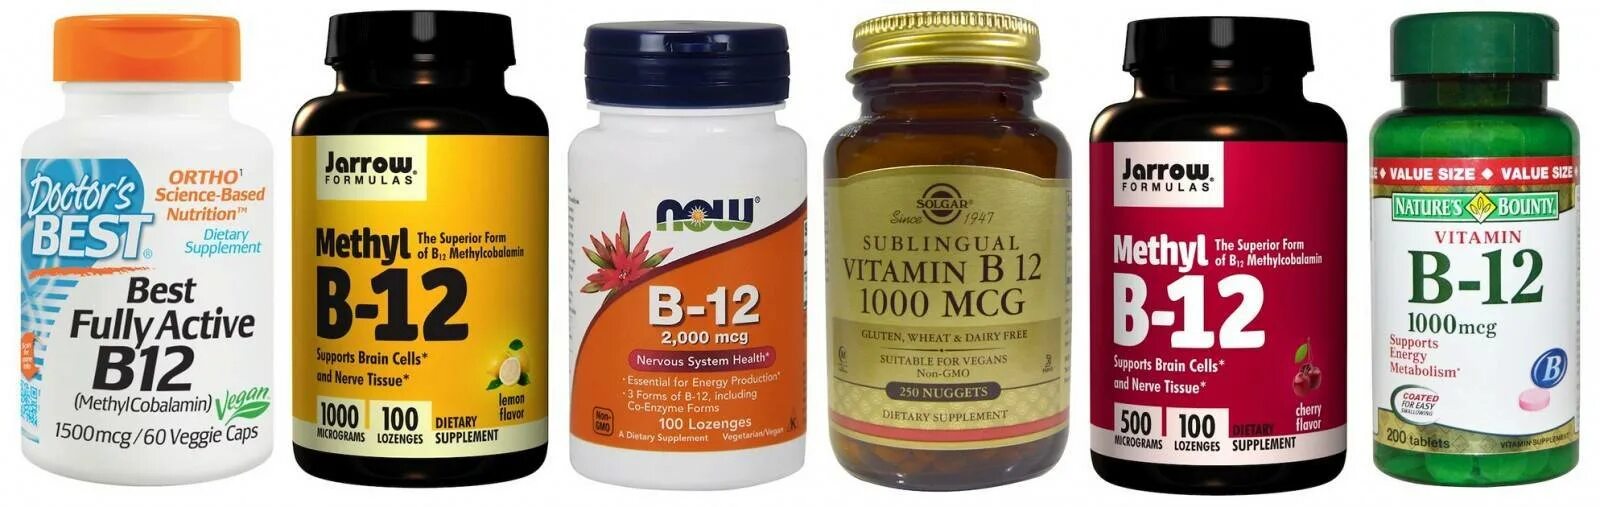 Витаминный комплекс b6 b12. B12 витамин в таблетках в Турции. Витамин б12 препараты в таблетках. Цианокобаламин витамин в12 в таблетках. Препараты комплексы витаминов группы в